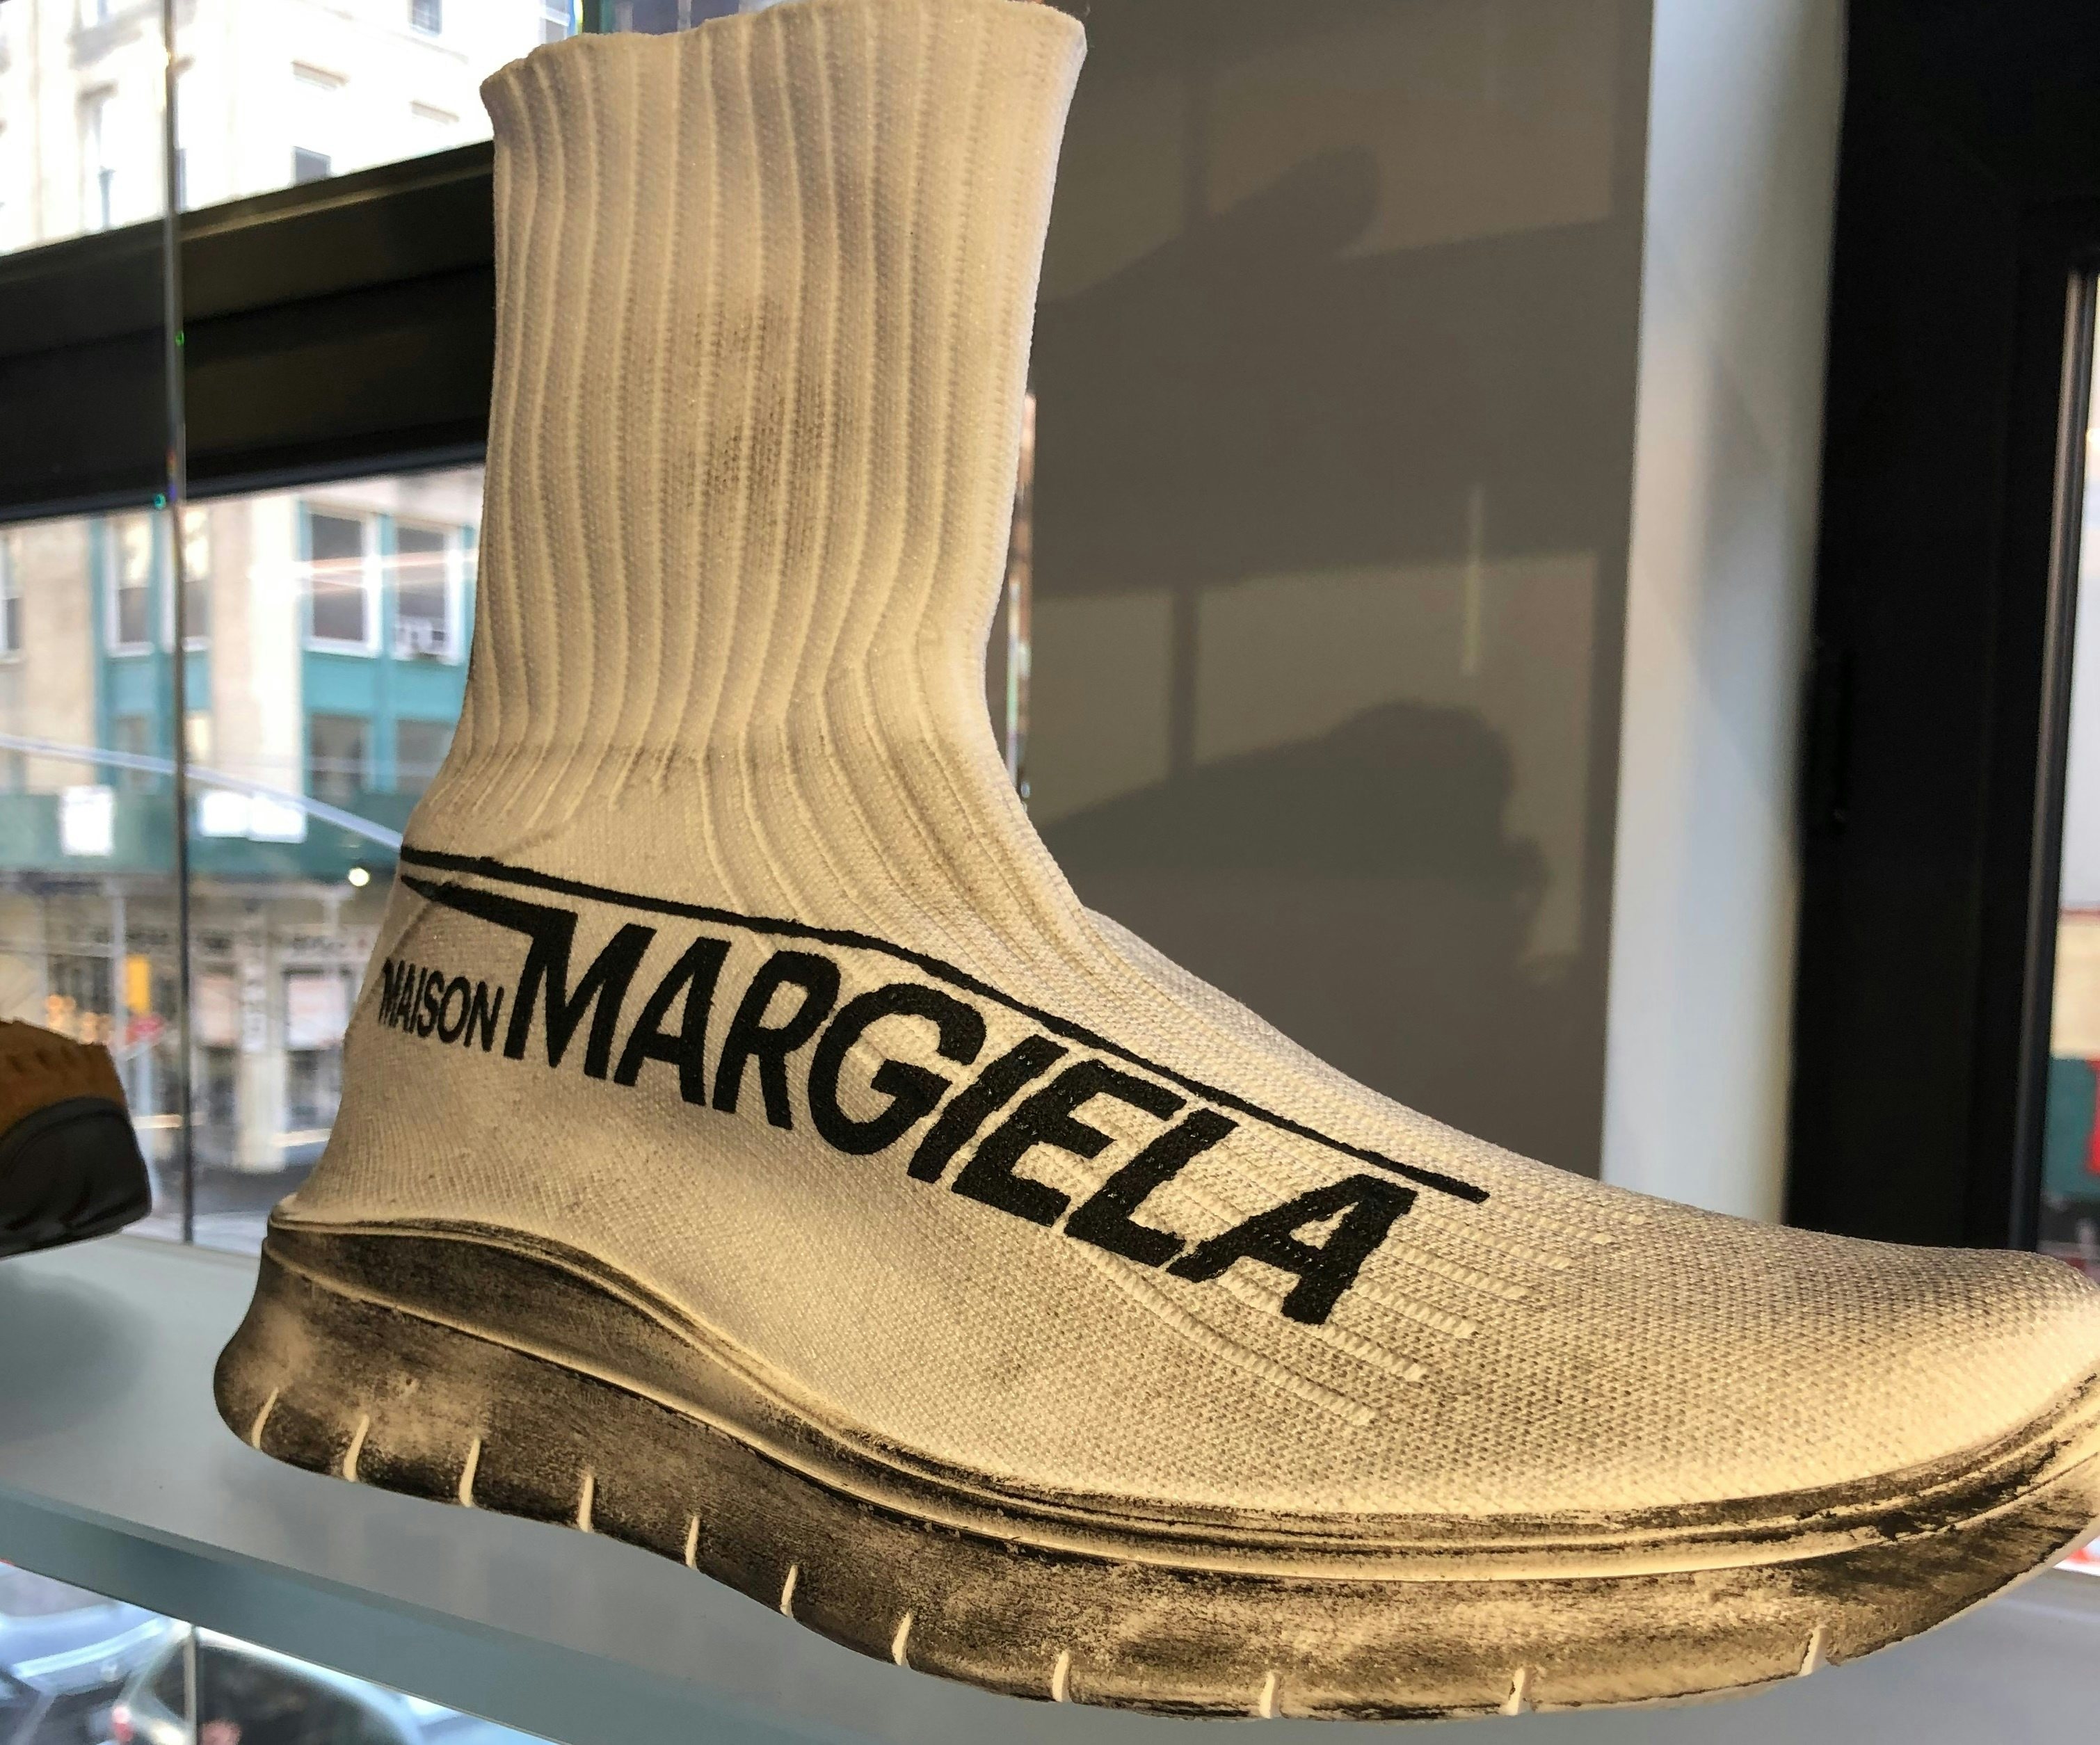 Maison Margiela dirty sneakers. Photo: Daniel Langer